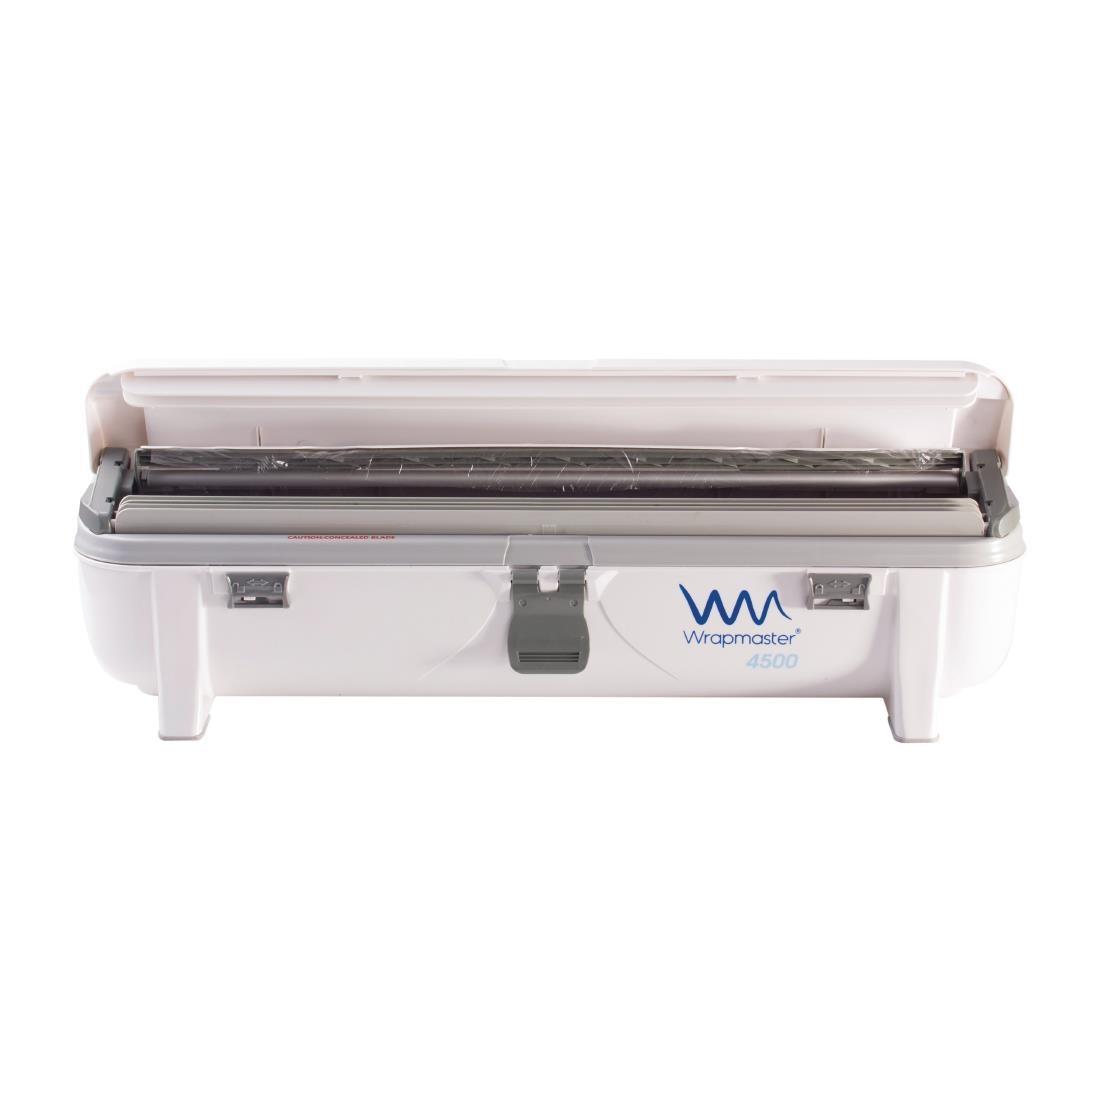 Wrapmaster 4500 Cling Film and Foil Dispenser - M802  - 5